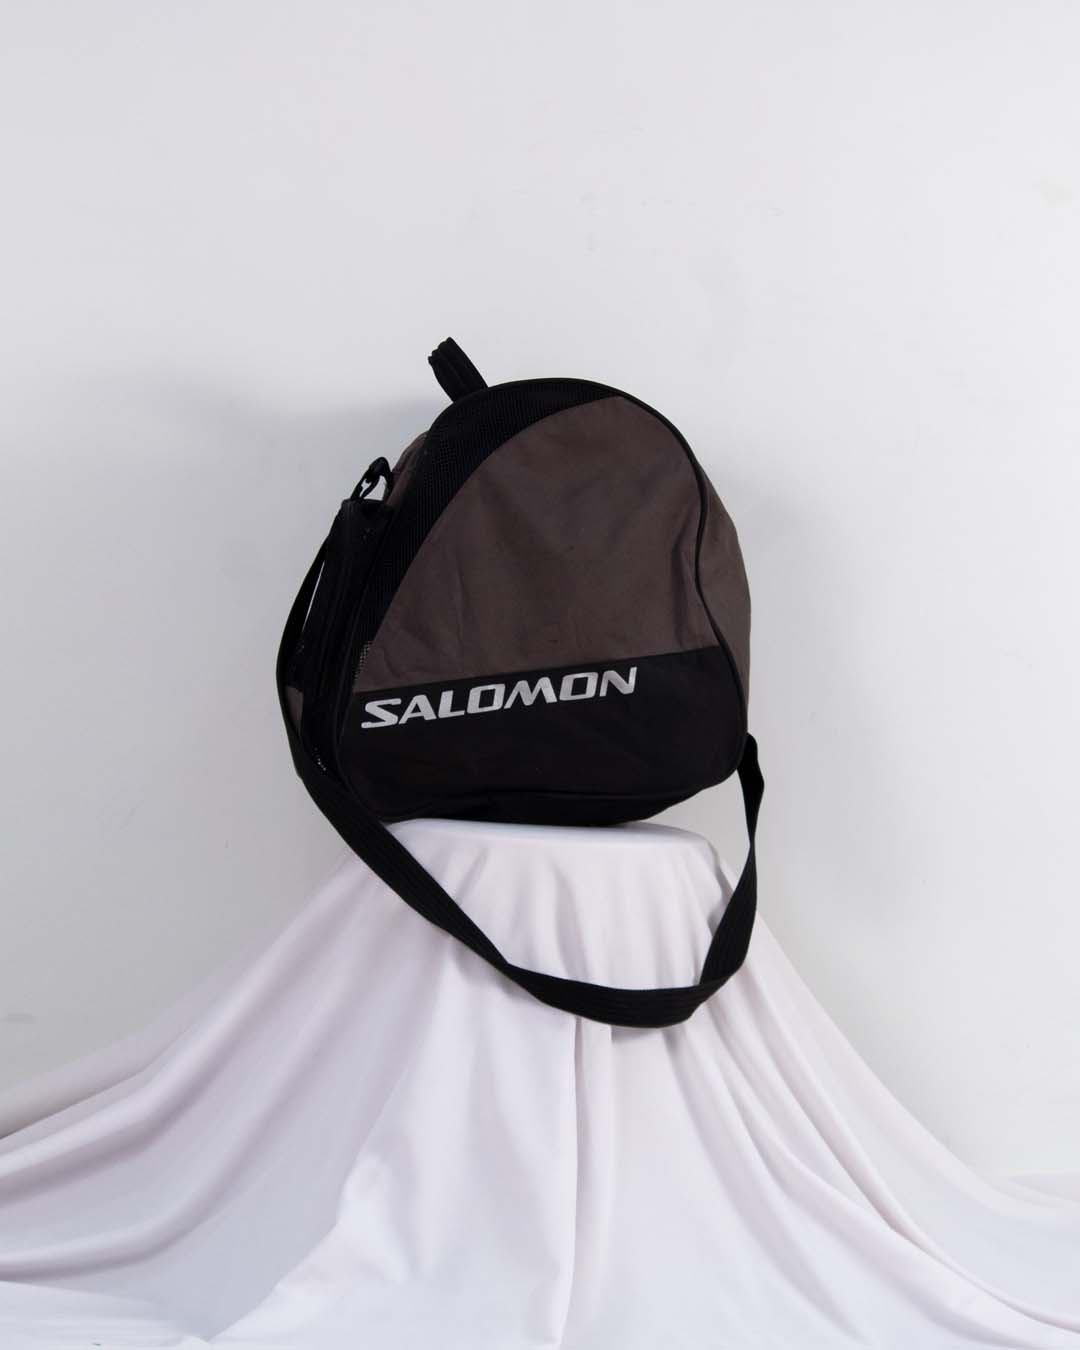 Salomon bag